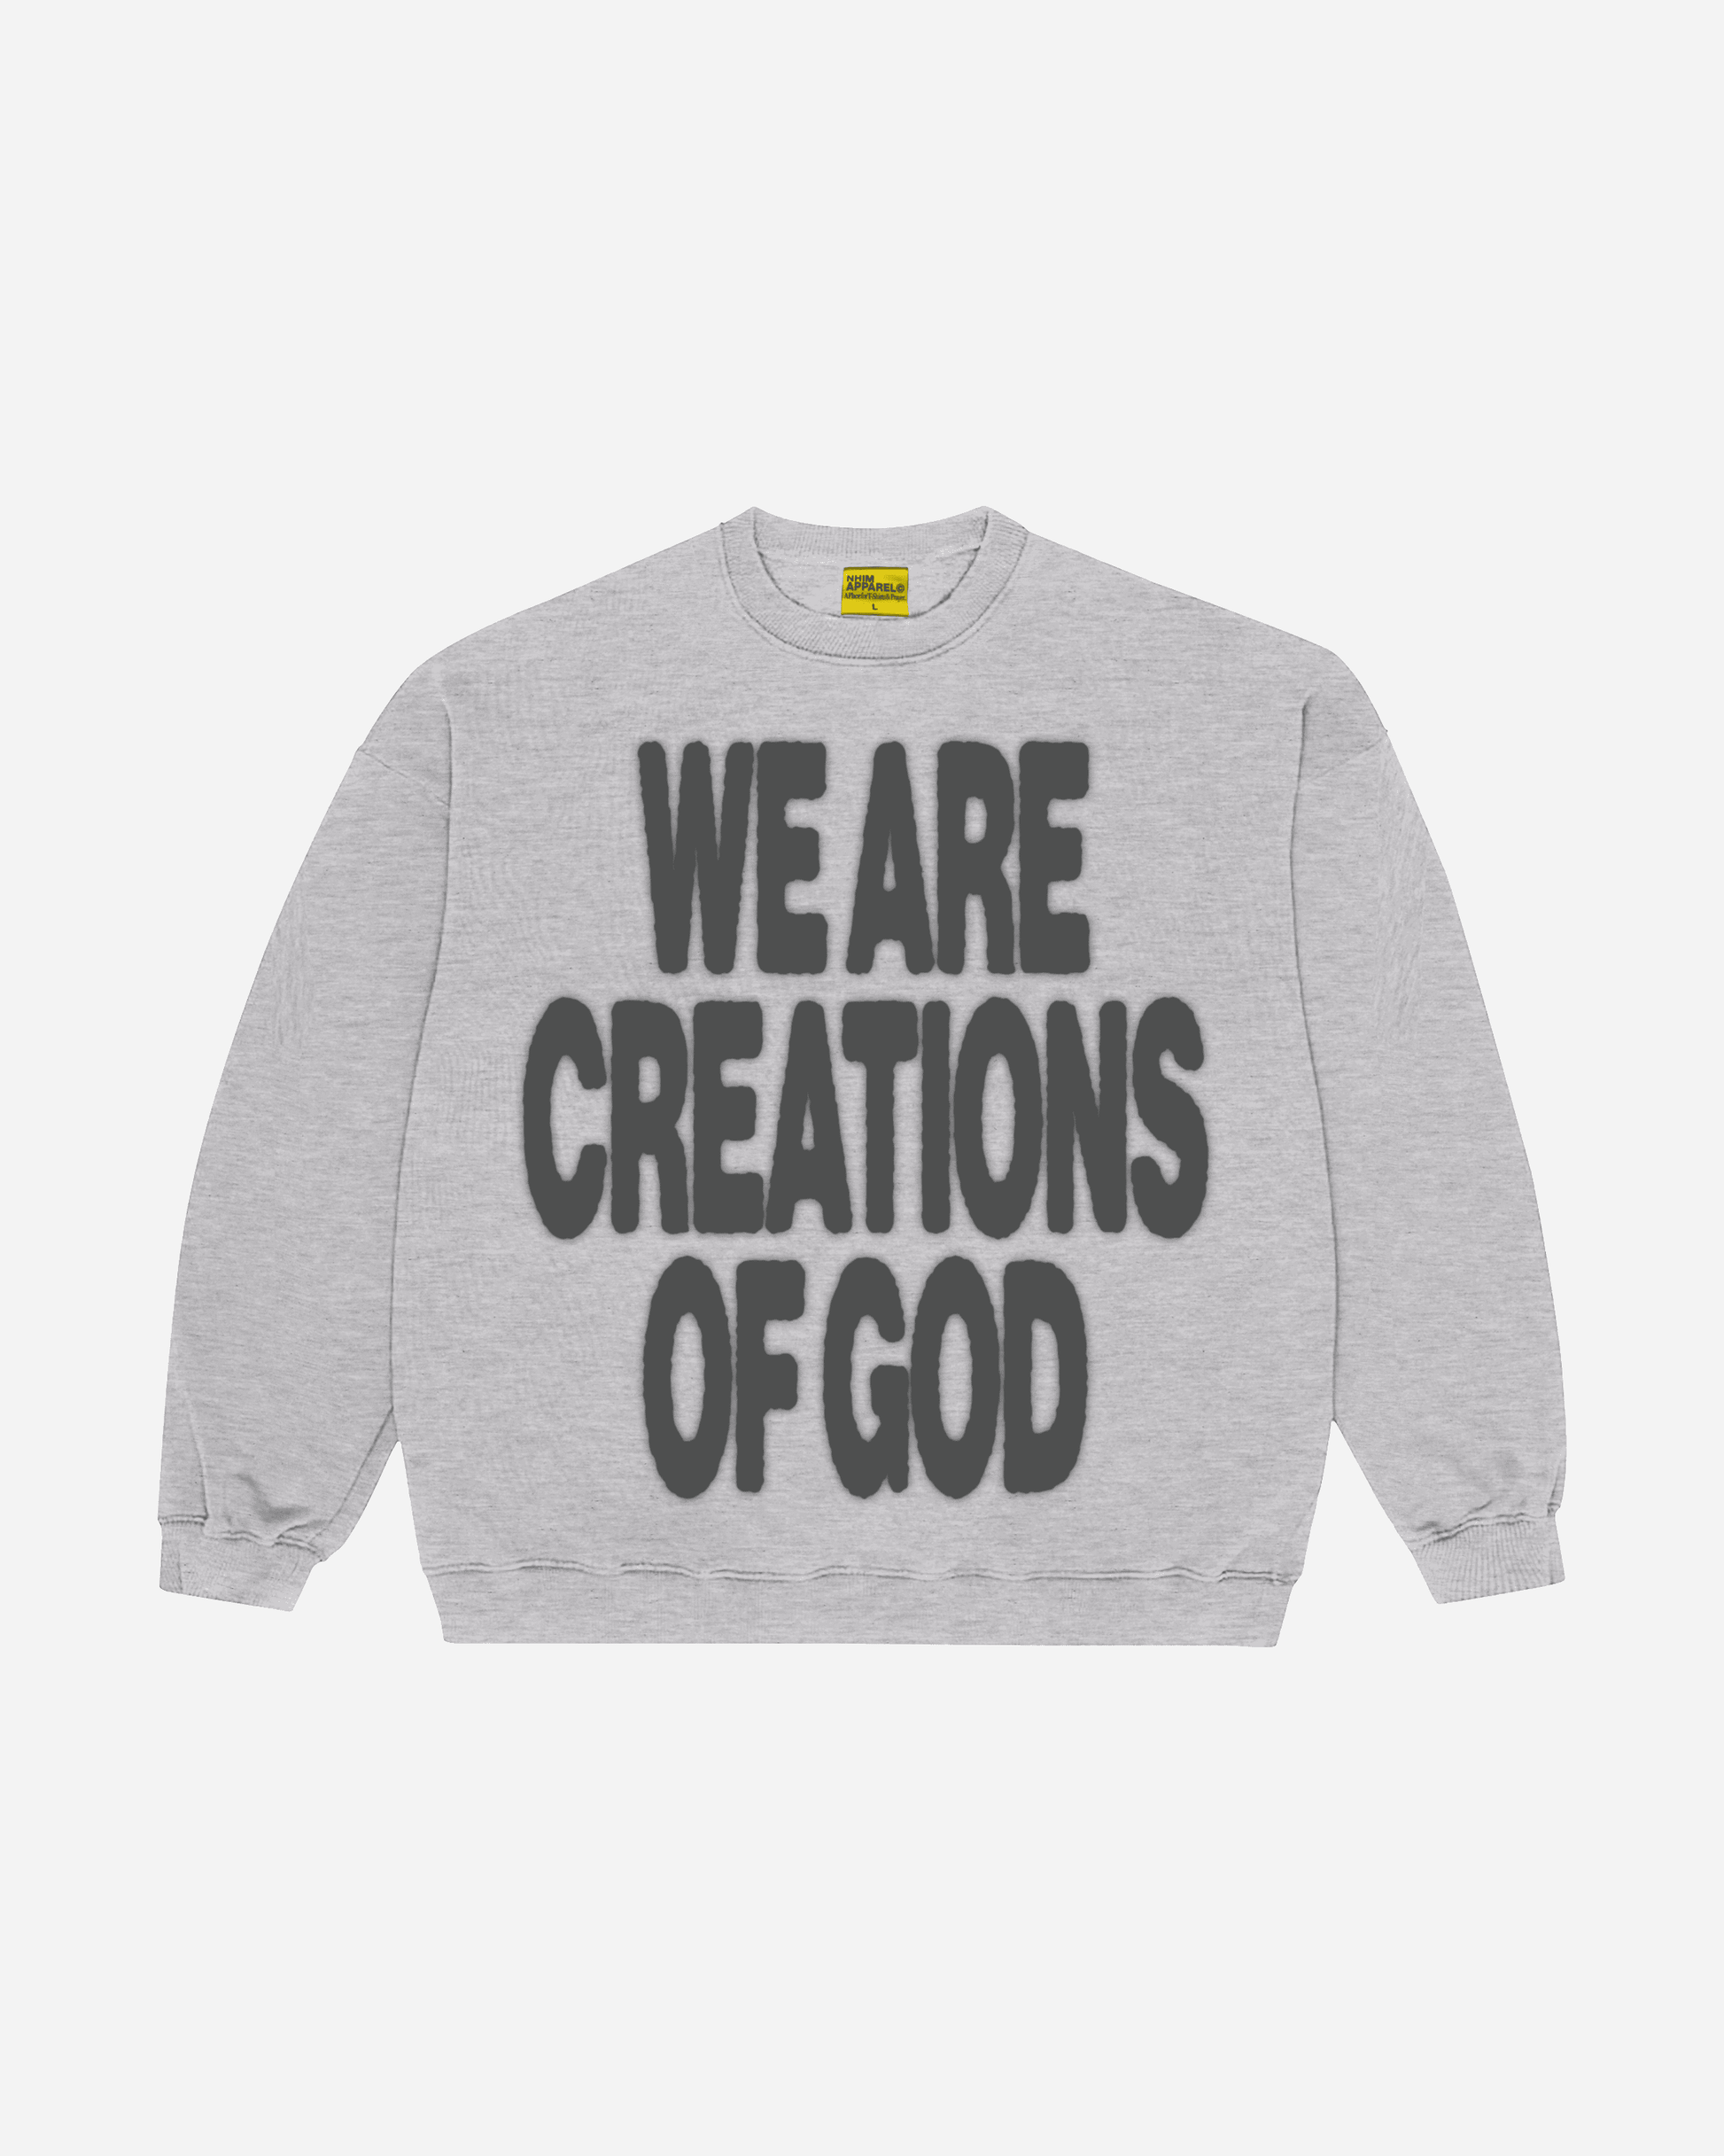 We are creations of God crewneck sweatshirt by NHIM Apparel christian clothing brand